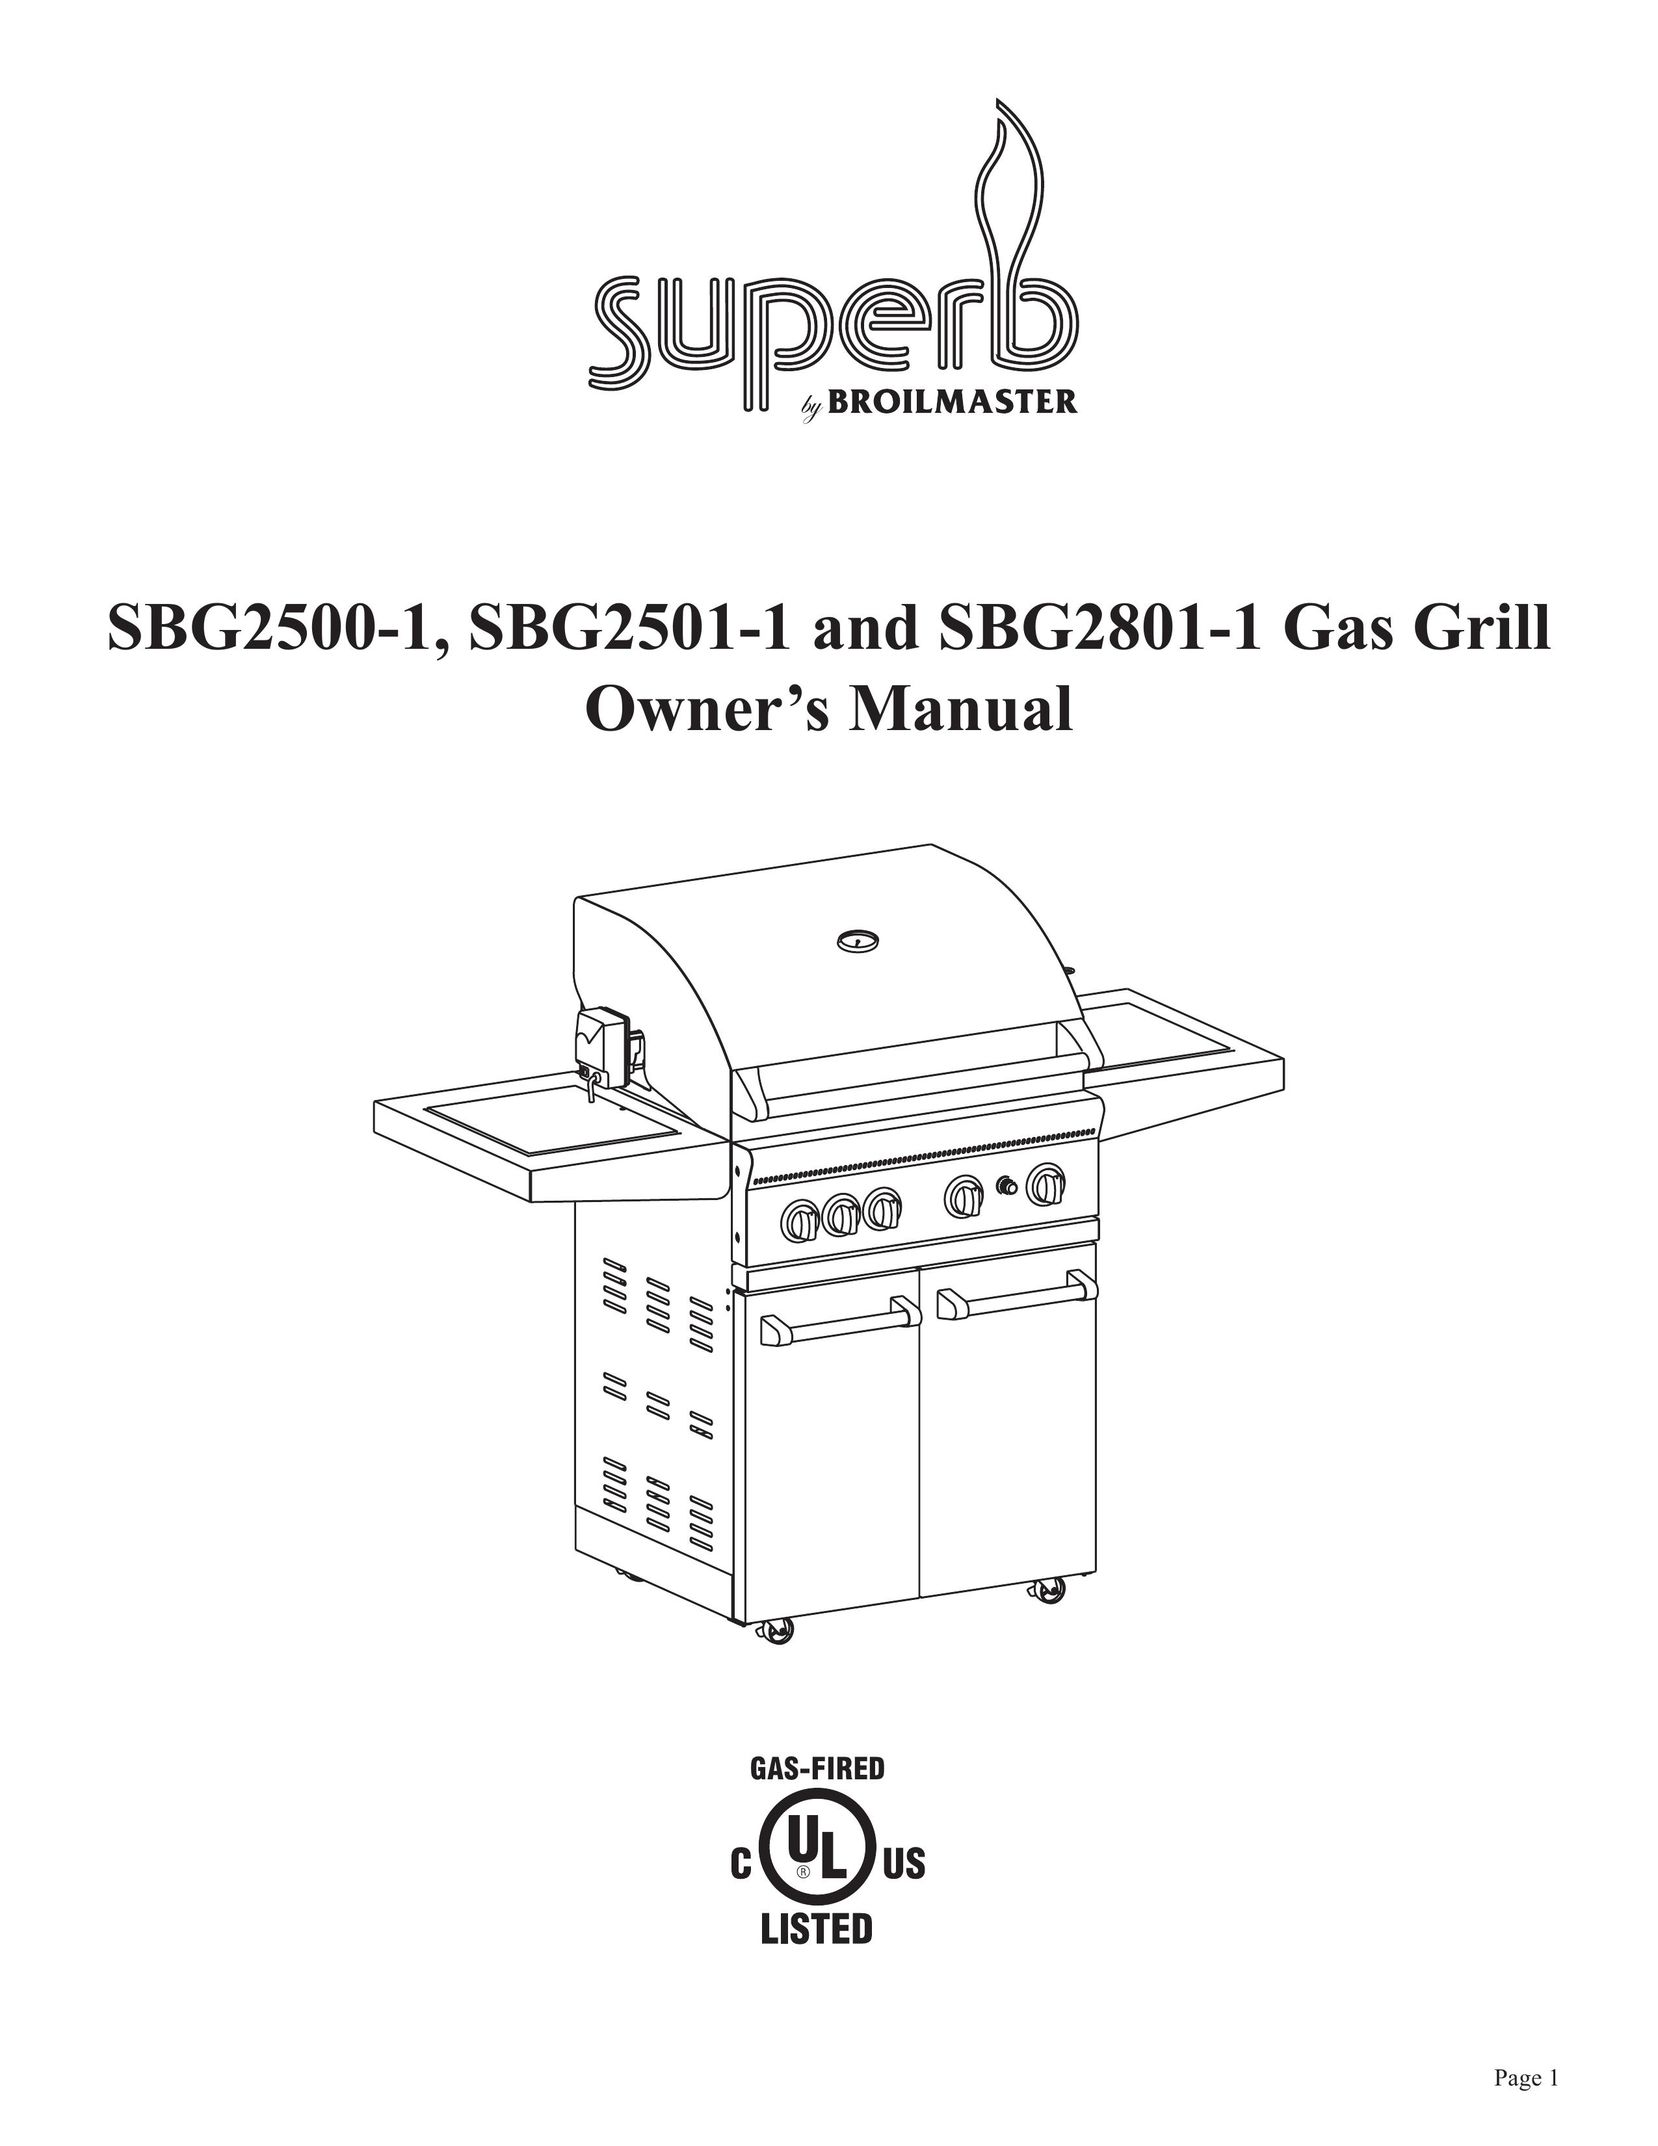 Broilmaster SBG2500-1 Kitchen Grill User Manual